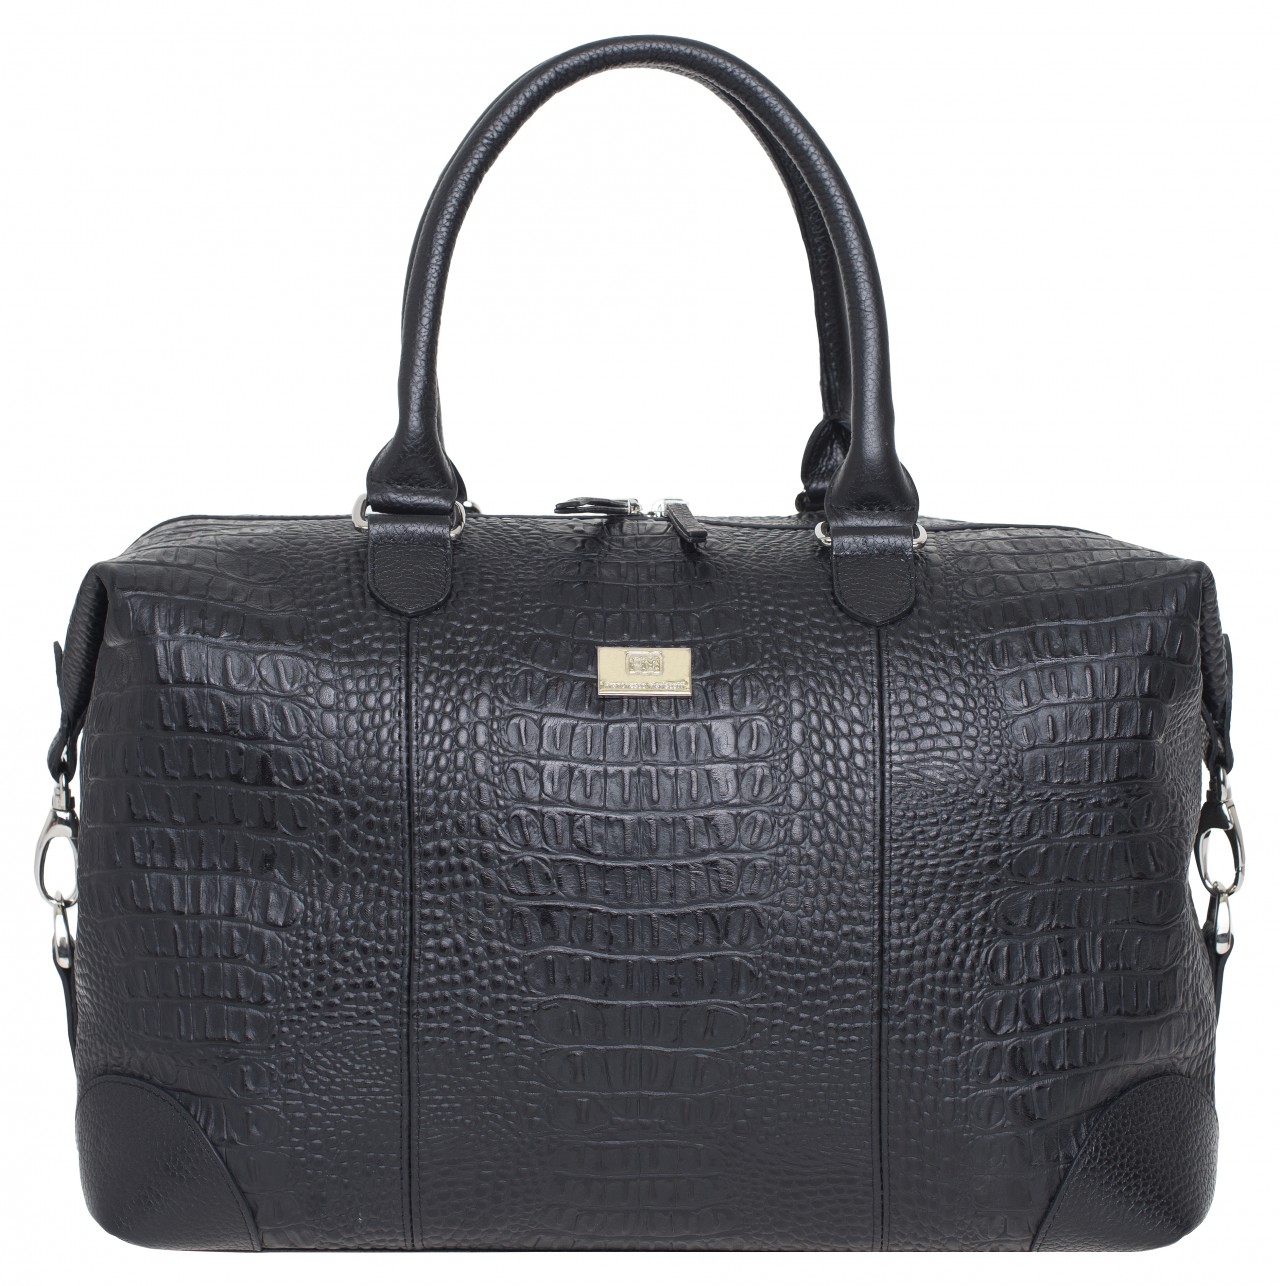 Дорожная сумка унисекс Franchesco Mariscotti 6-426 черная, 42х28х24 см